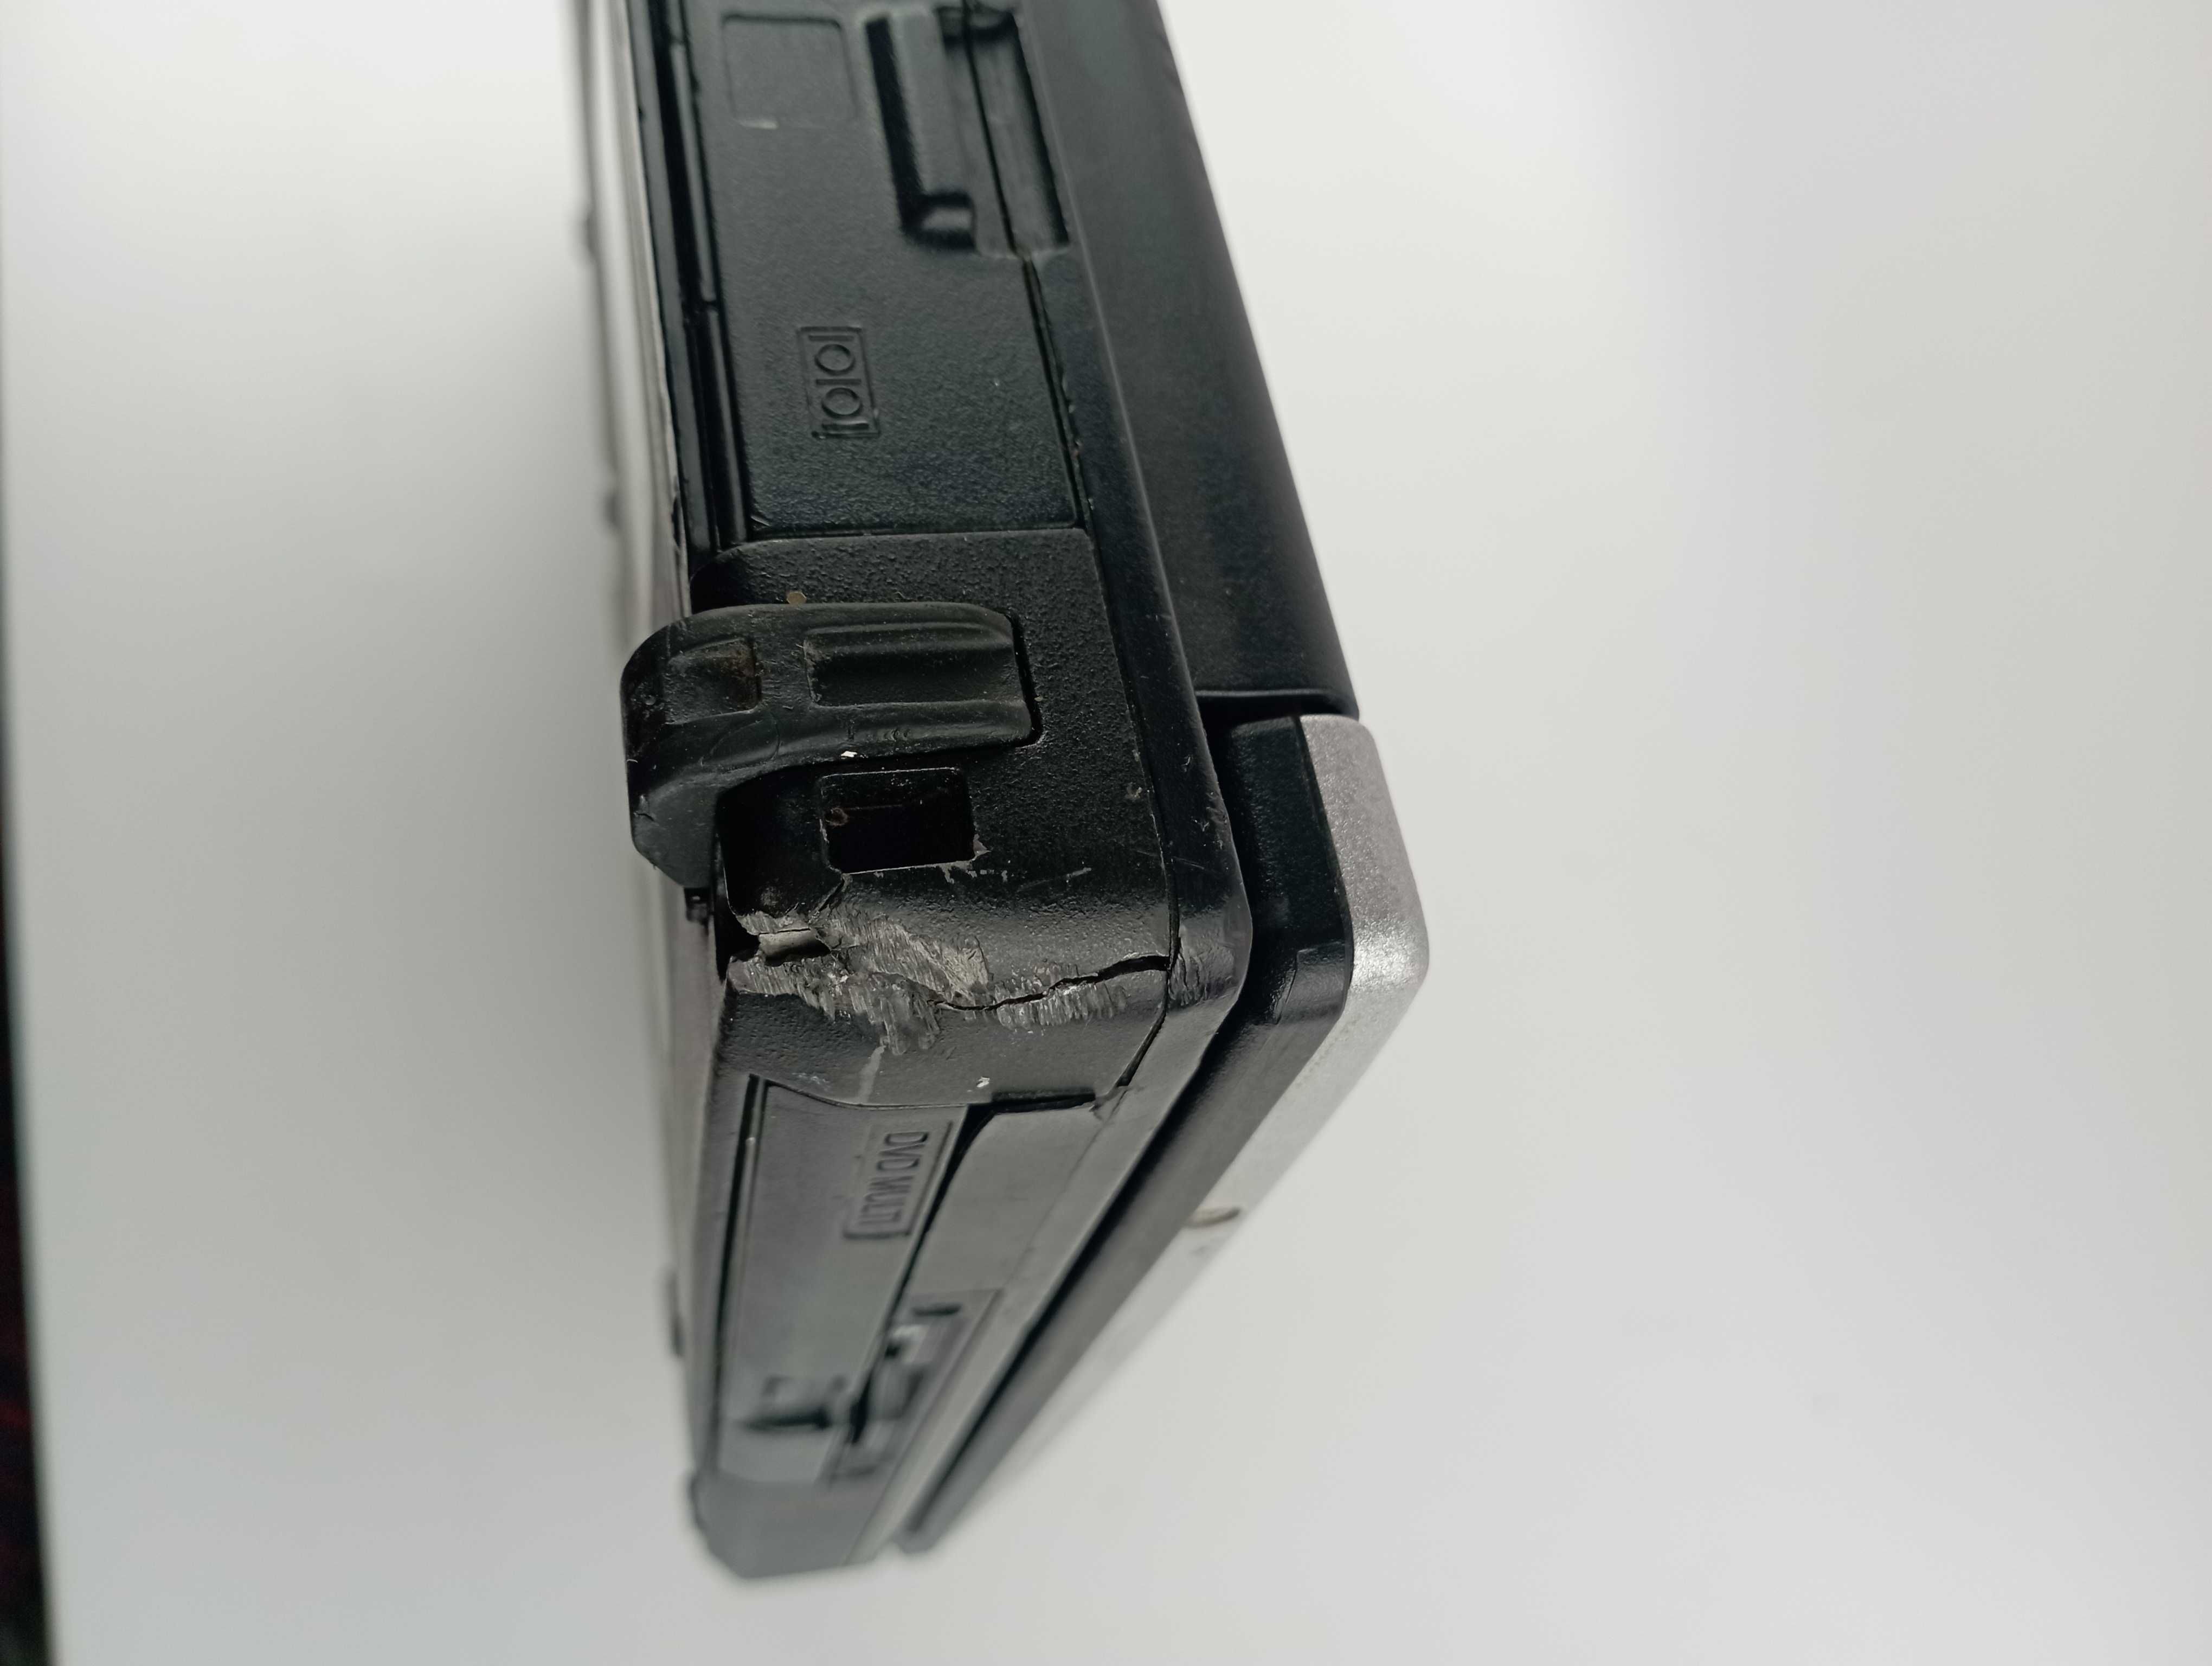 Захищений ноутбук Panasonic Toughbook CF-53 MK3(i5-3340M)